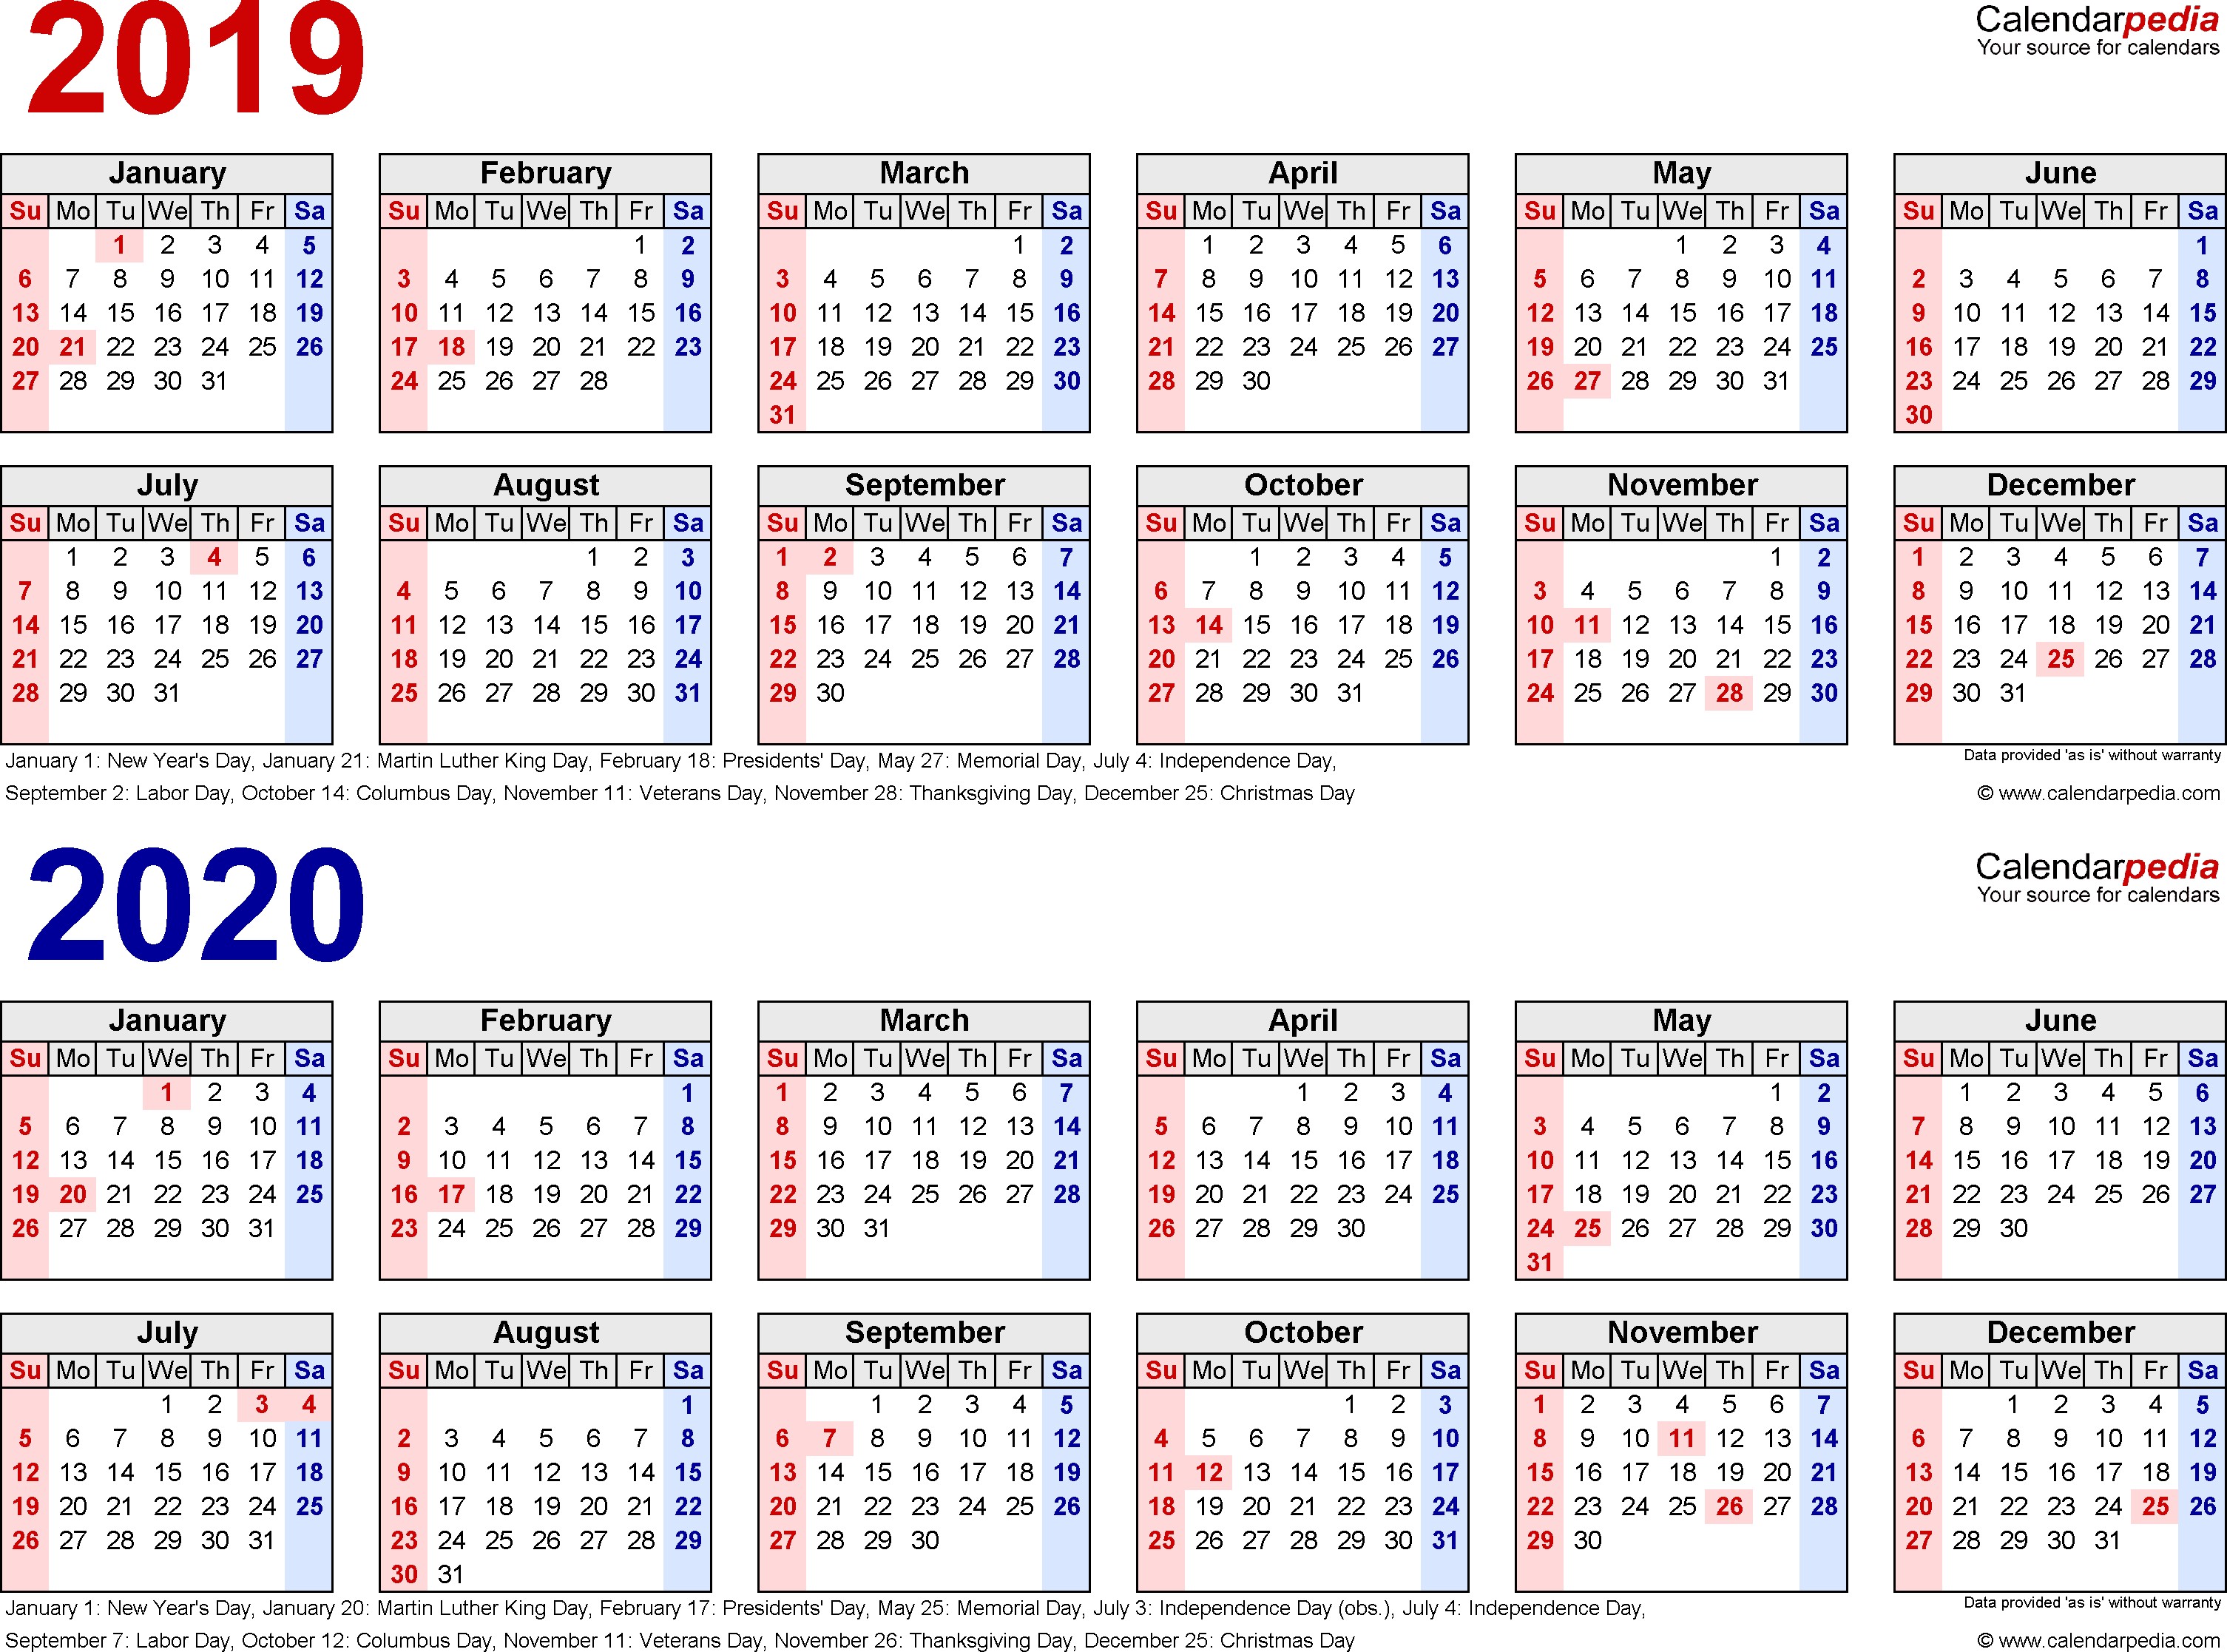 2019 2020 Calendar free printable two year PDF calendars